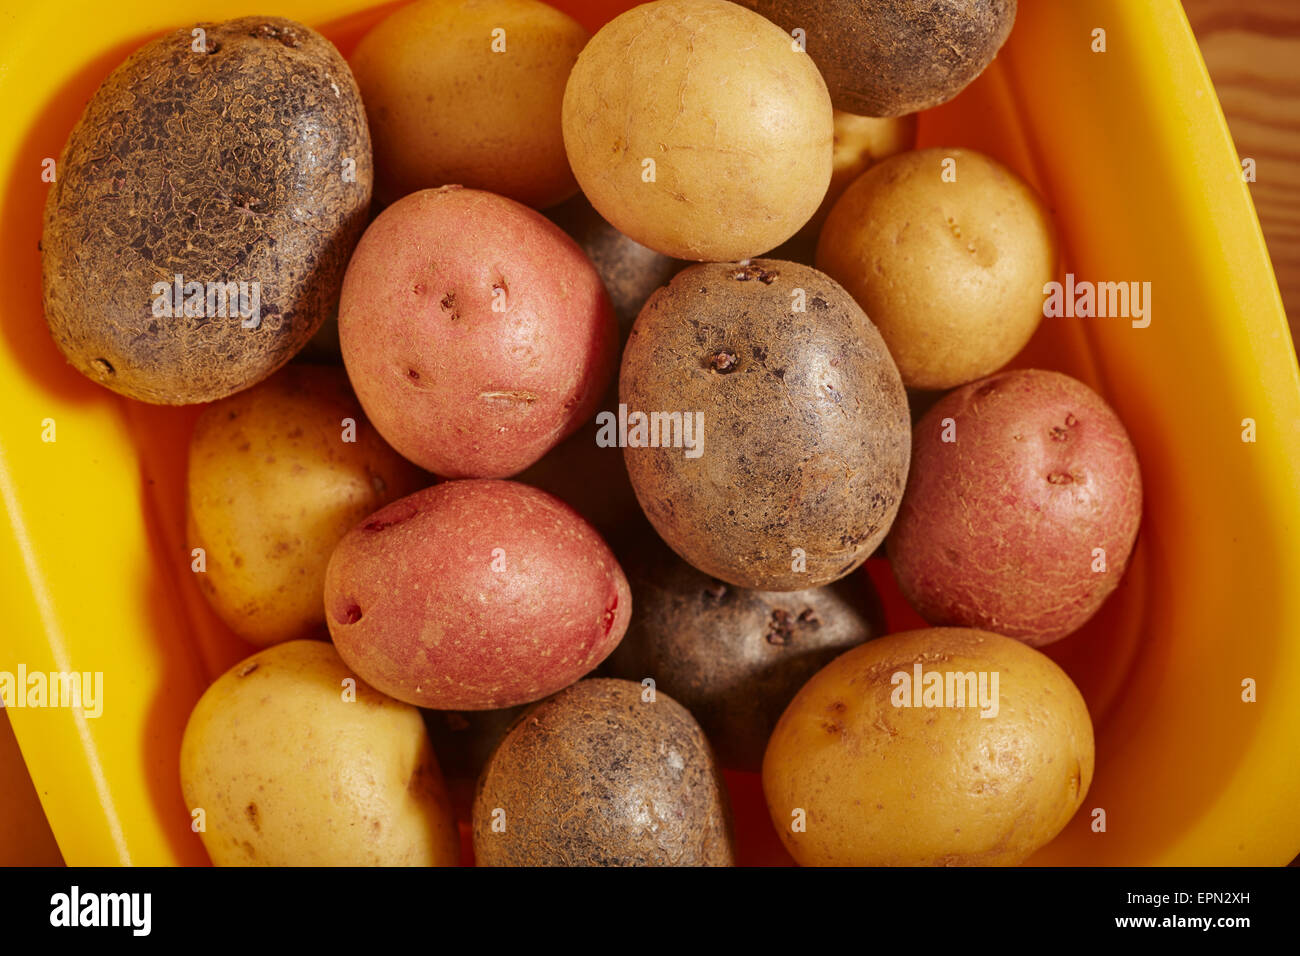 Assorted baby potatoes Stock Photo